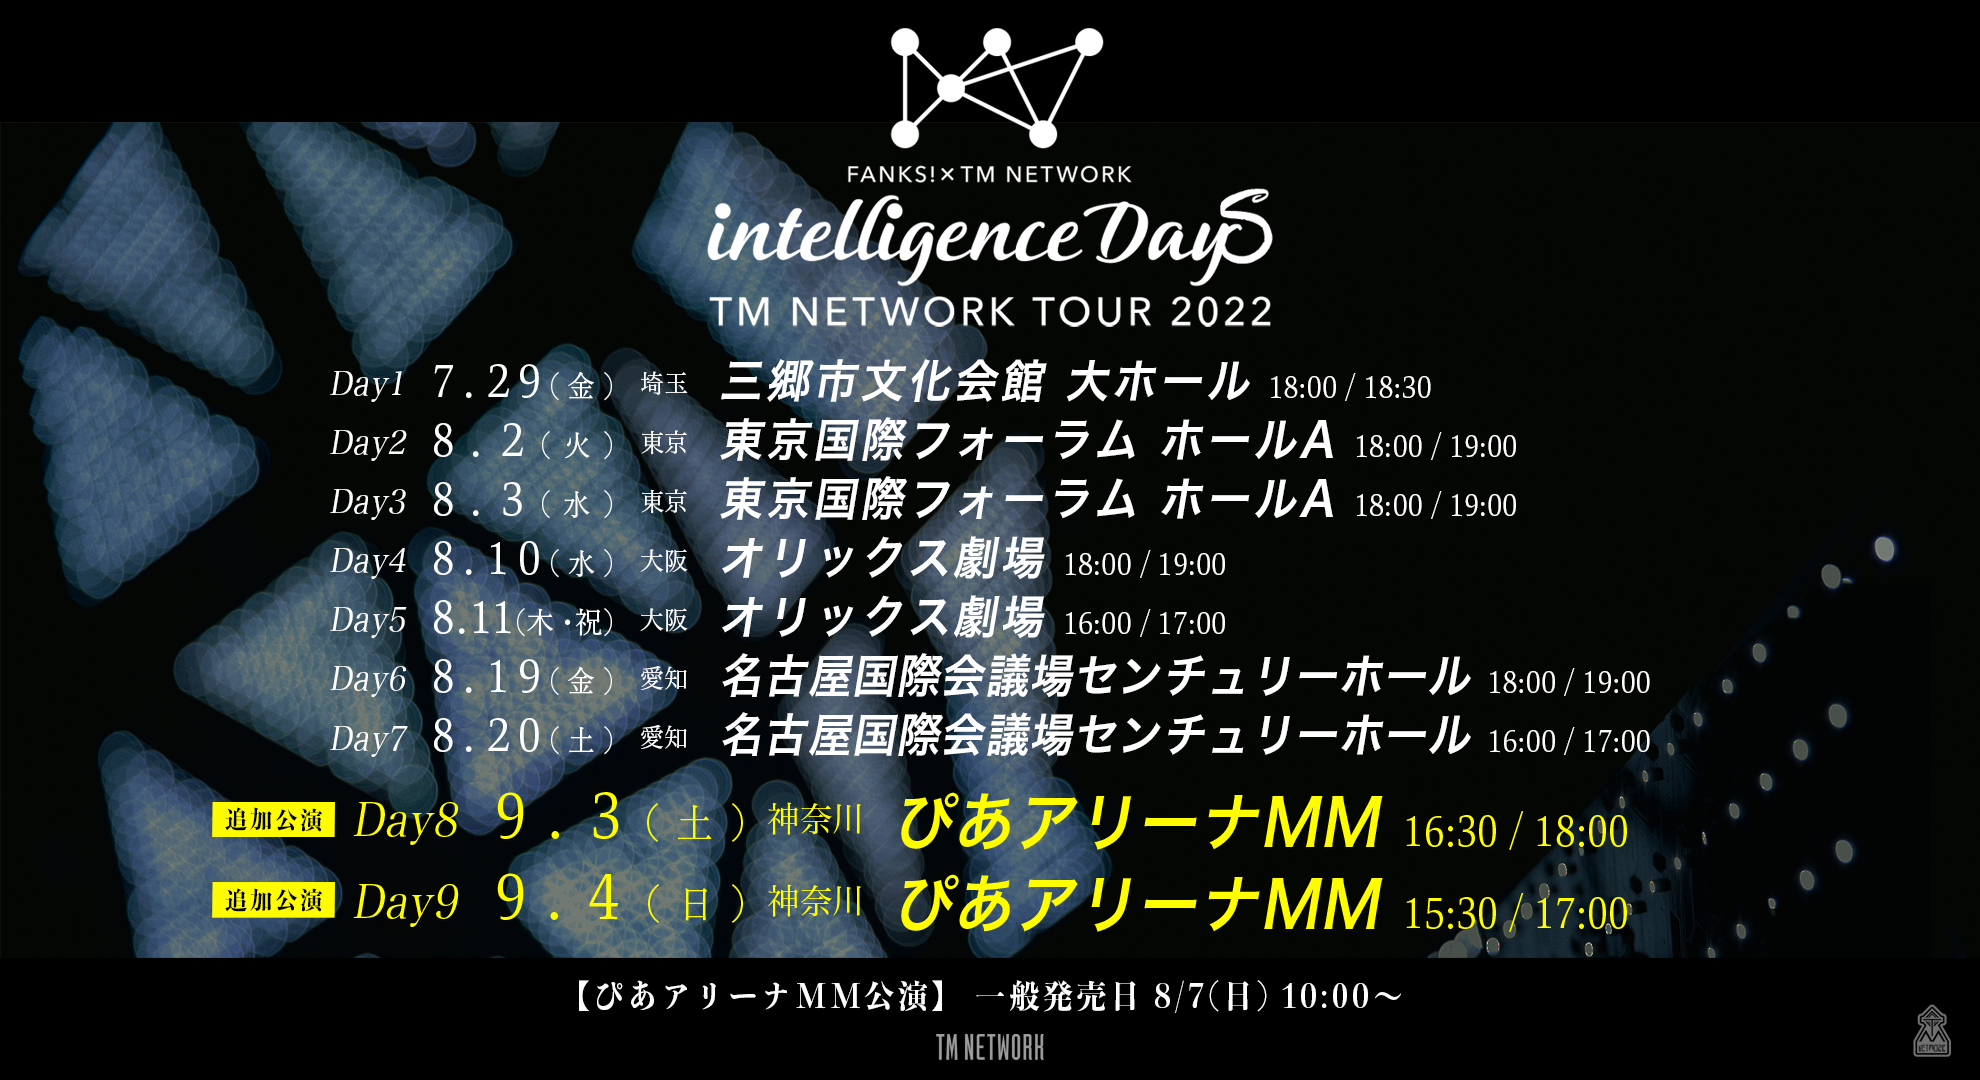 TM NETWORK TOUR 2022“FANKS intelligence Days”